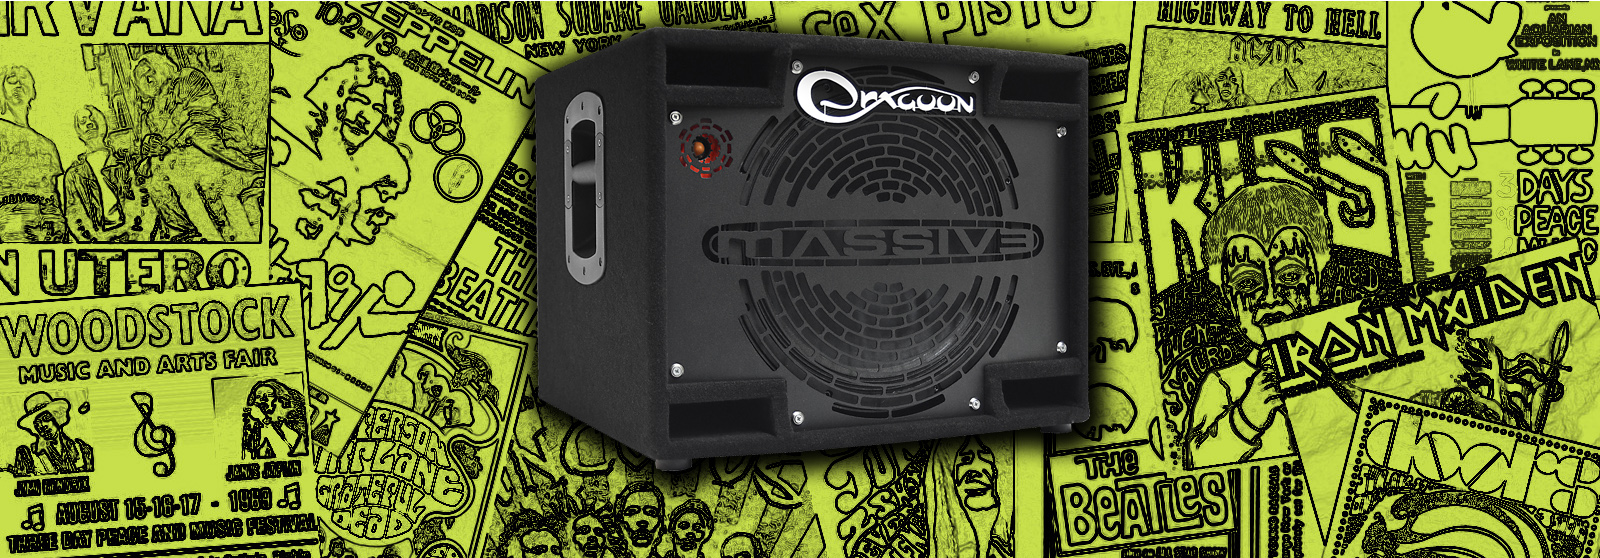 Dragoon - The Custom Speaker - DRAGOON-MASSIVE®-DM8115-_20160331160848833302.jpg